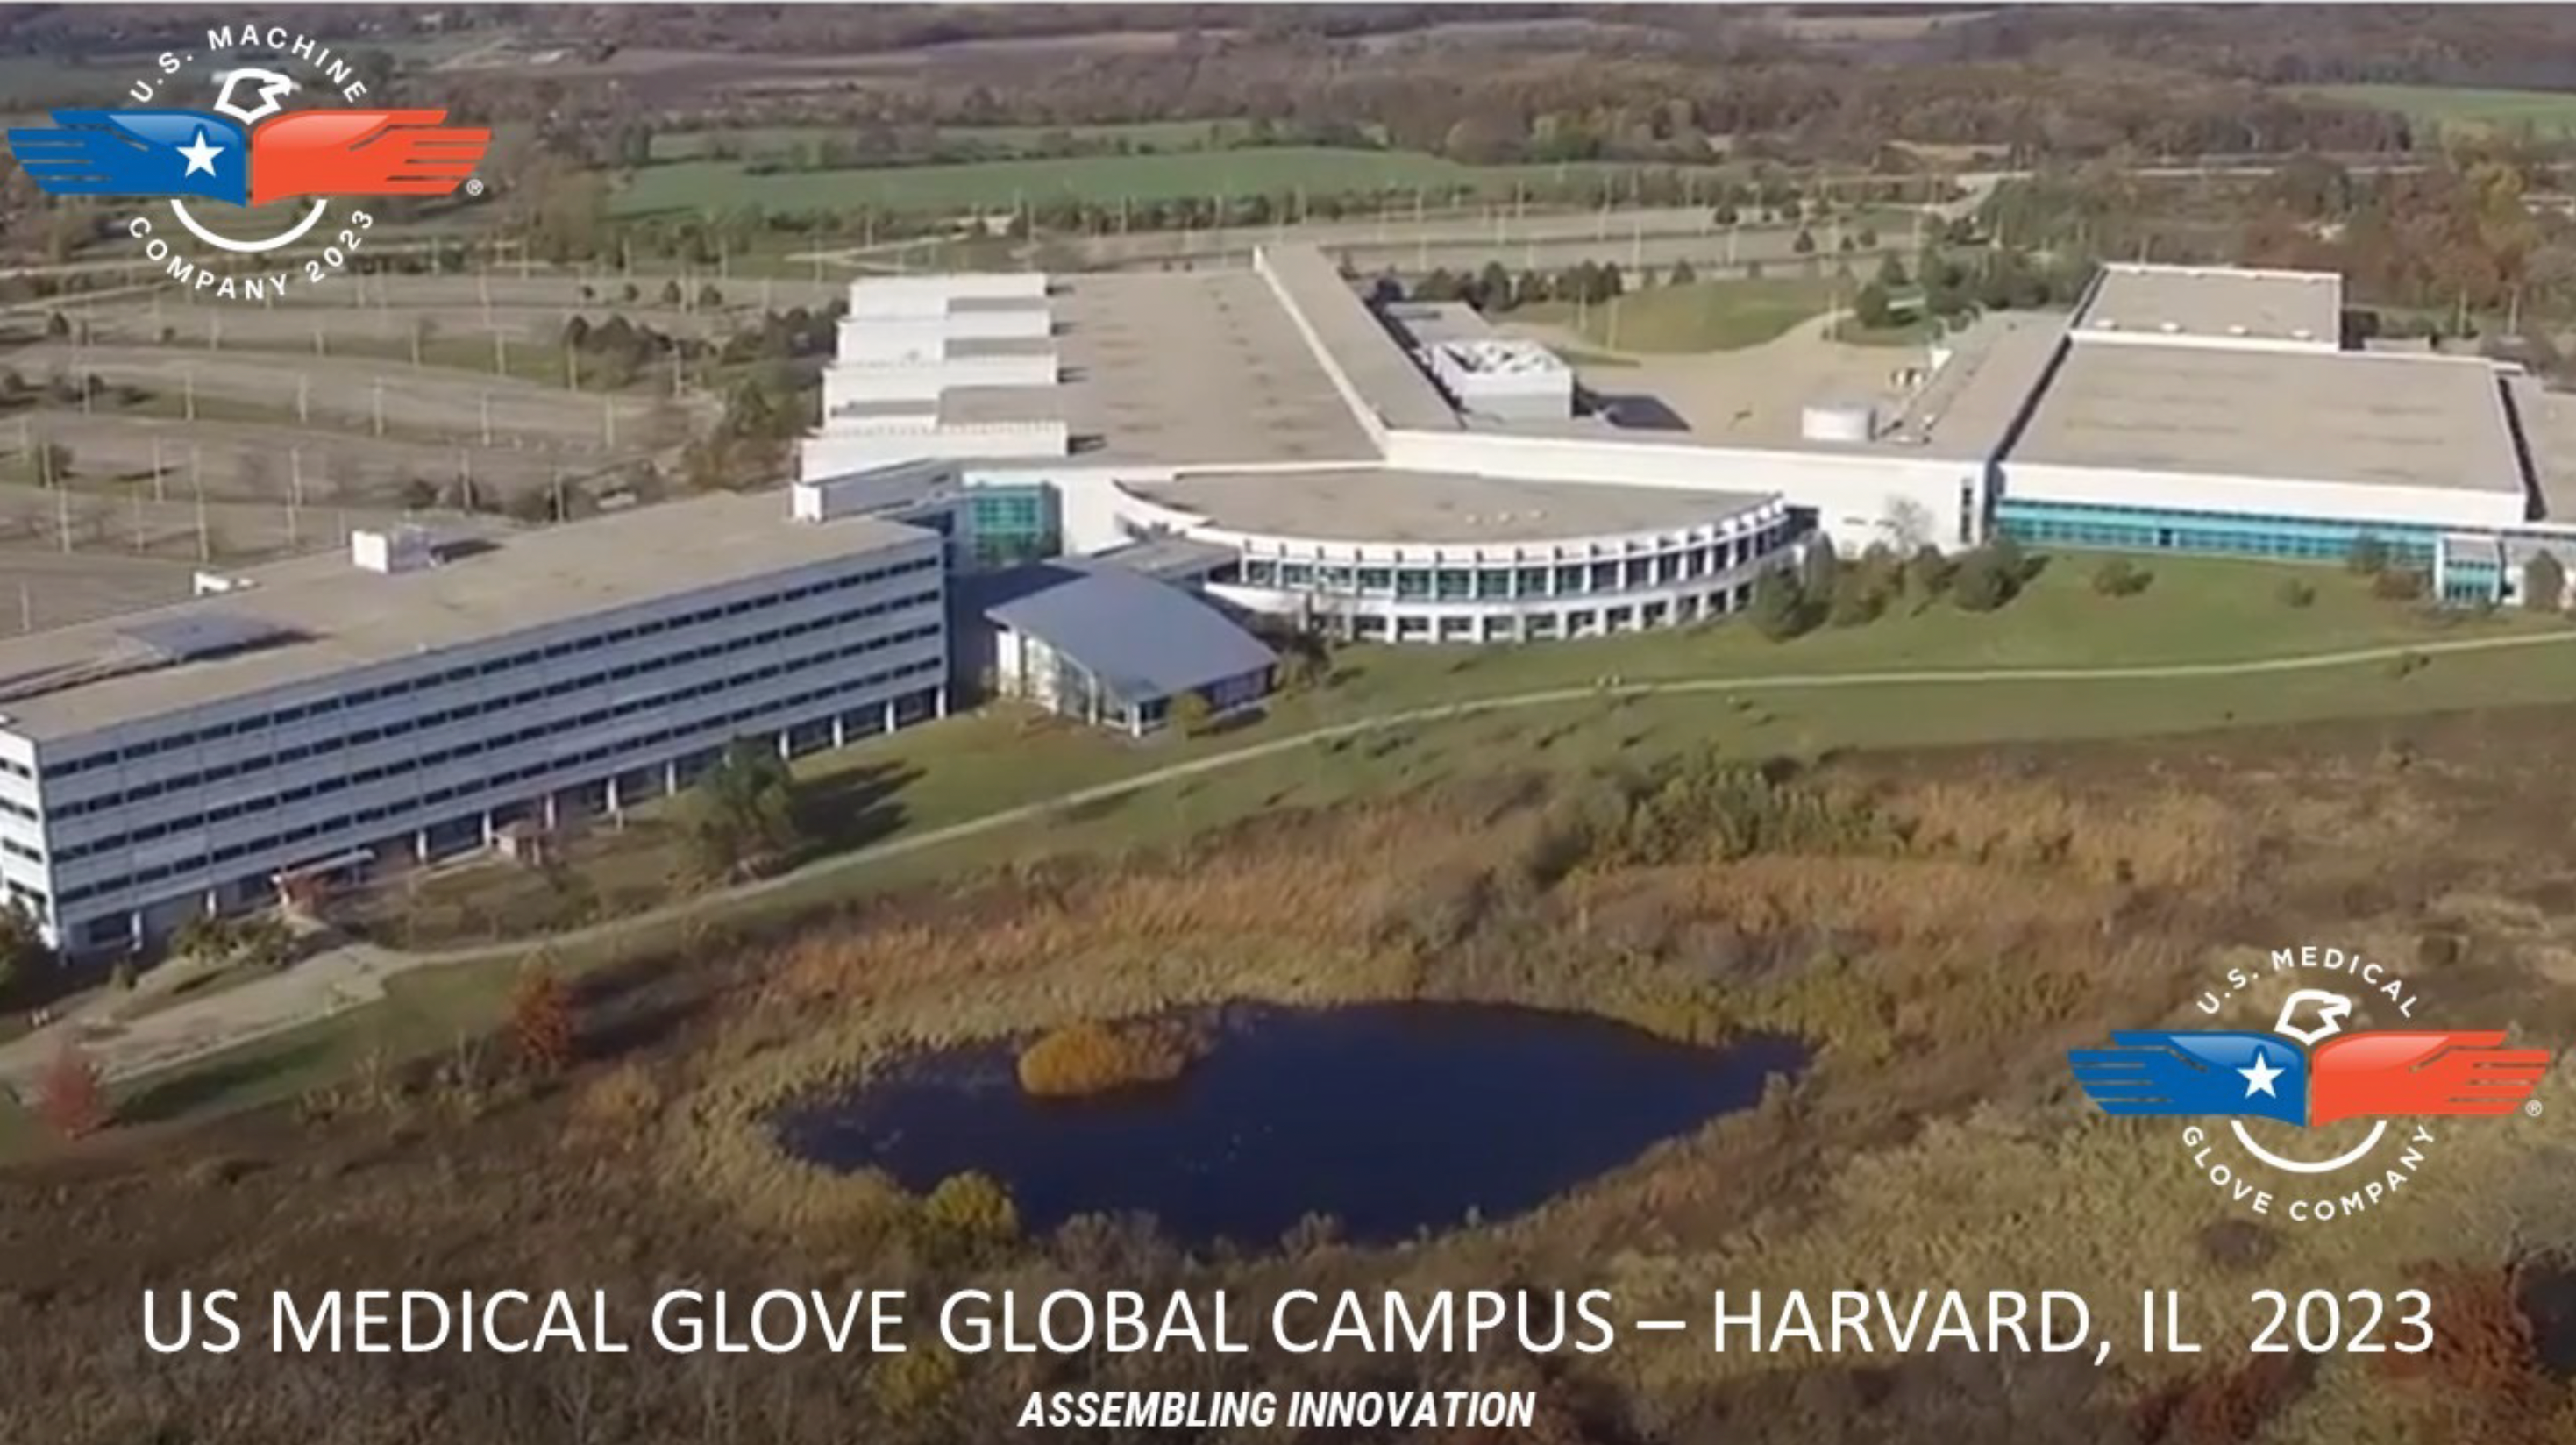 Harvard’s Motorola building purchased by U.S Medical Glove Company